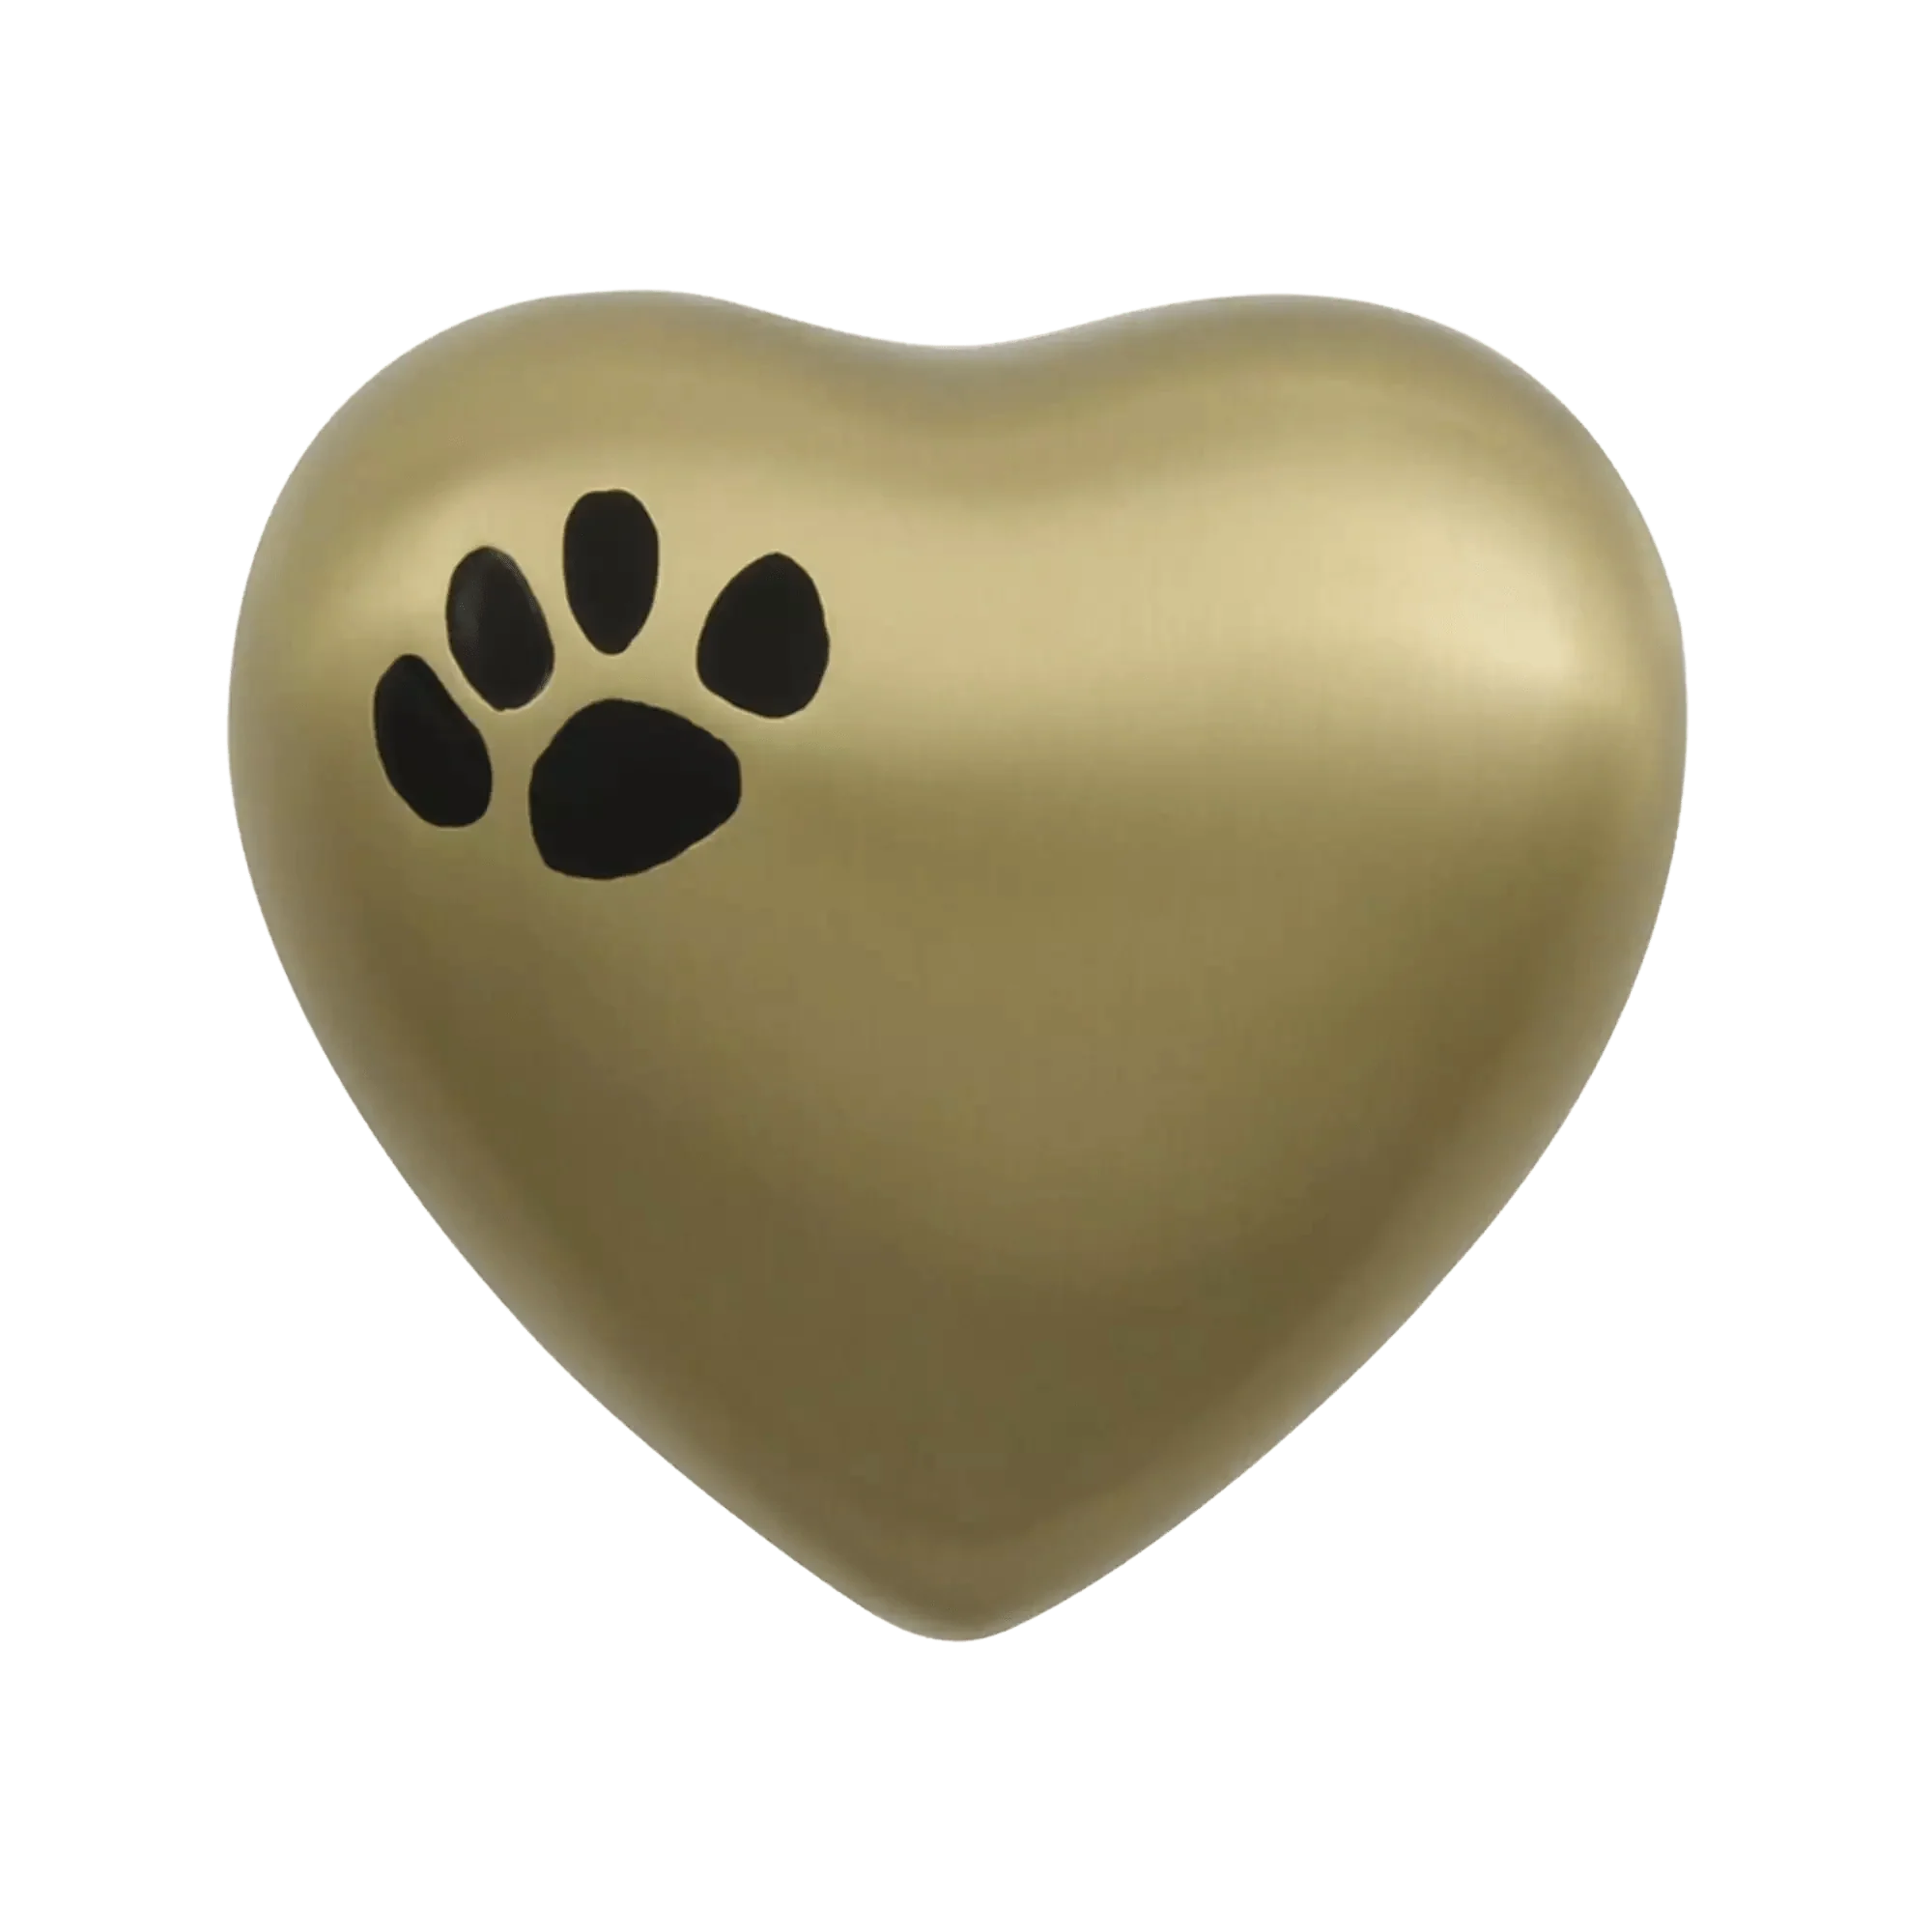 Classic Paws Bronze Heart Shaped Pet Urn